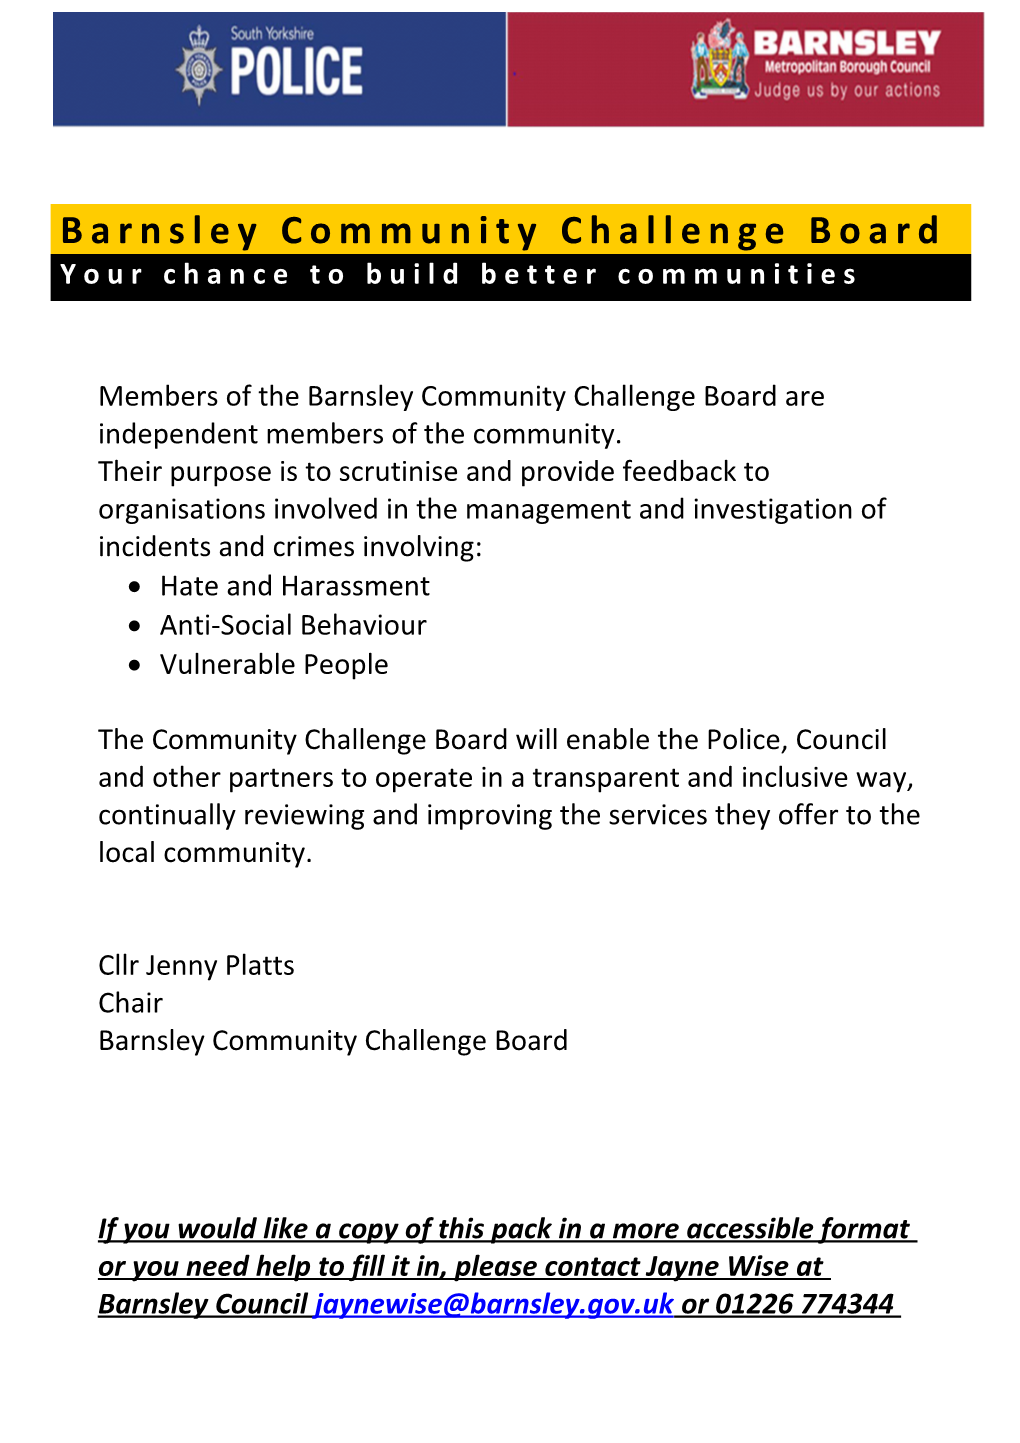 Members of the Barnsley Community Challenge Board Are Independent Members of the Community